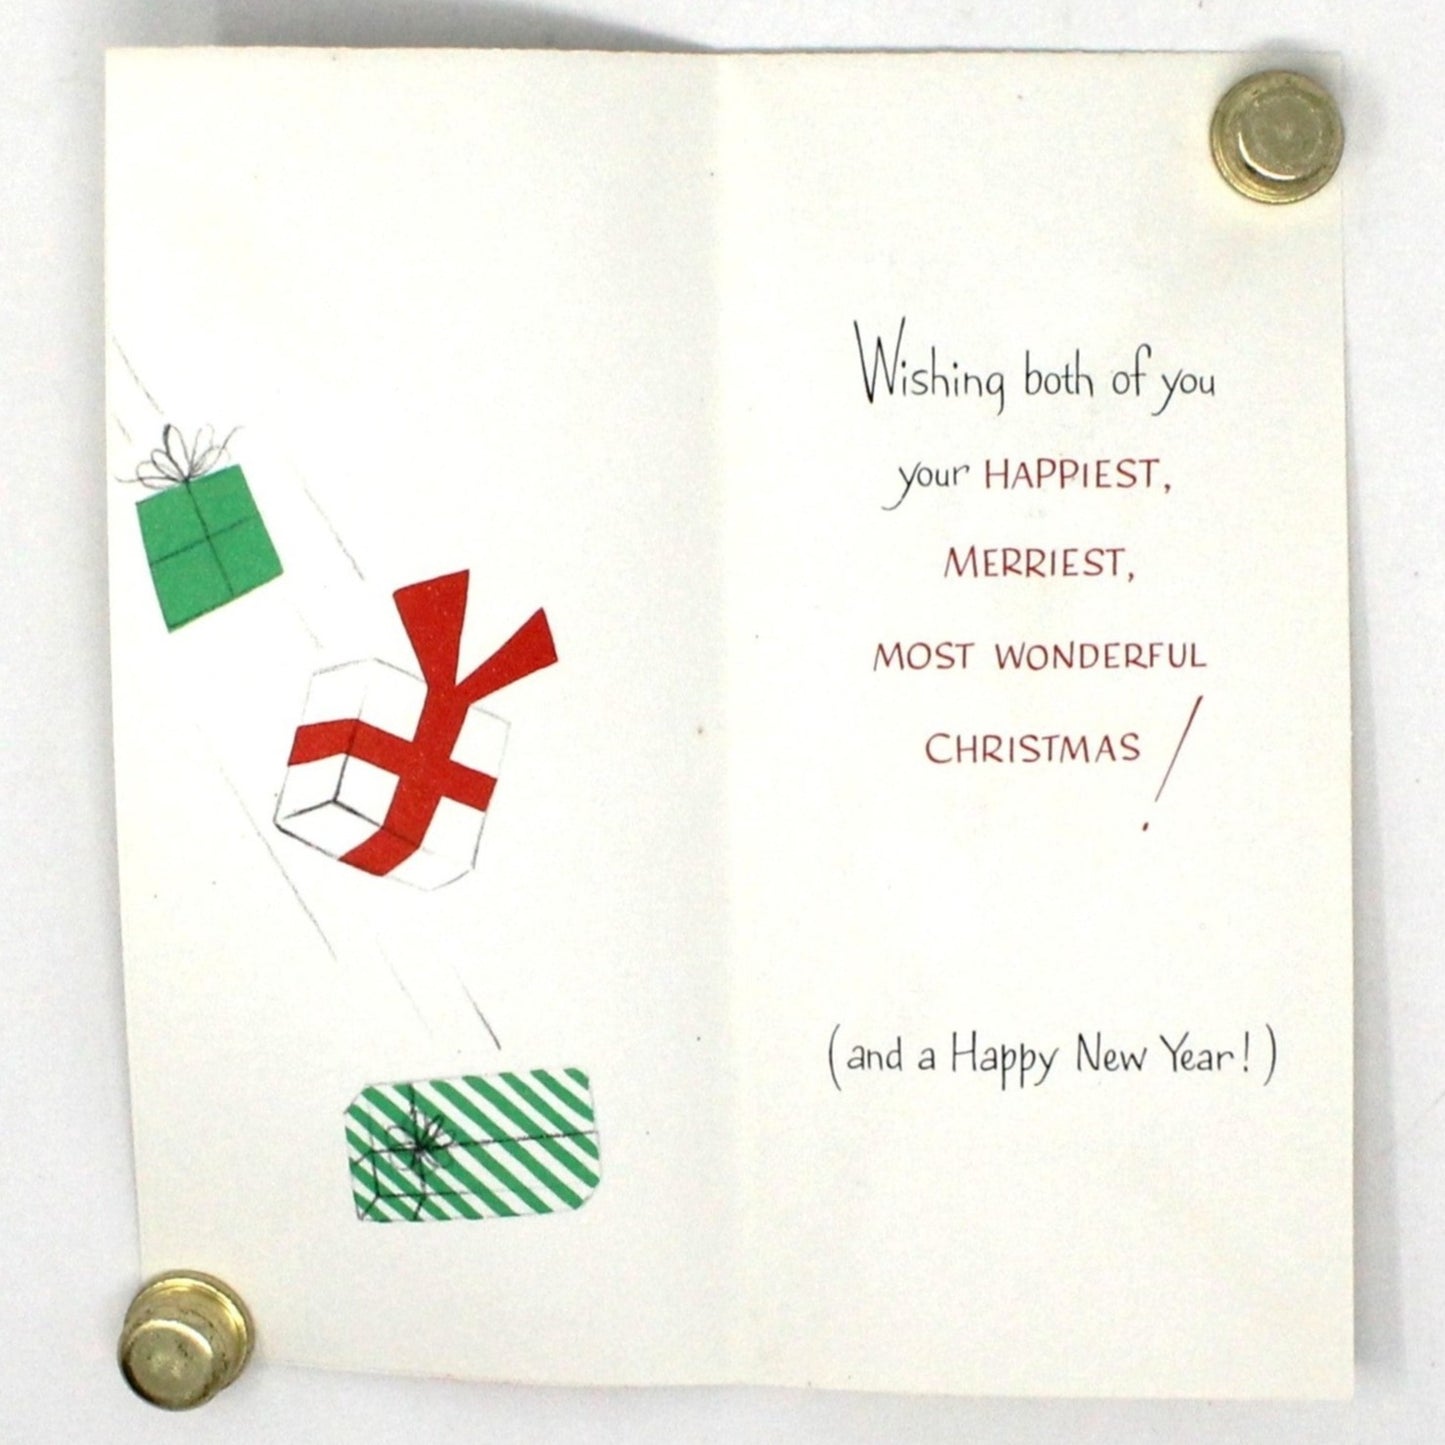 Greeting Card / Christmas Card, To Sister & Husband at Christmas, Original Vintage Stanley Greetings